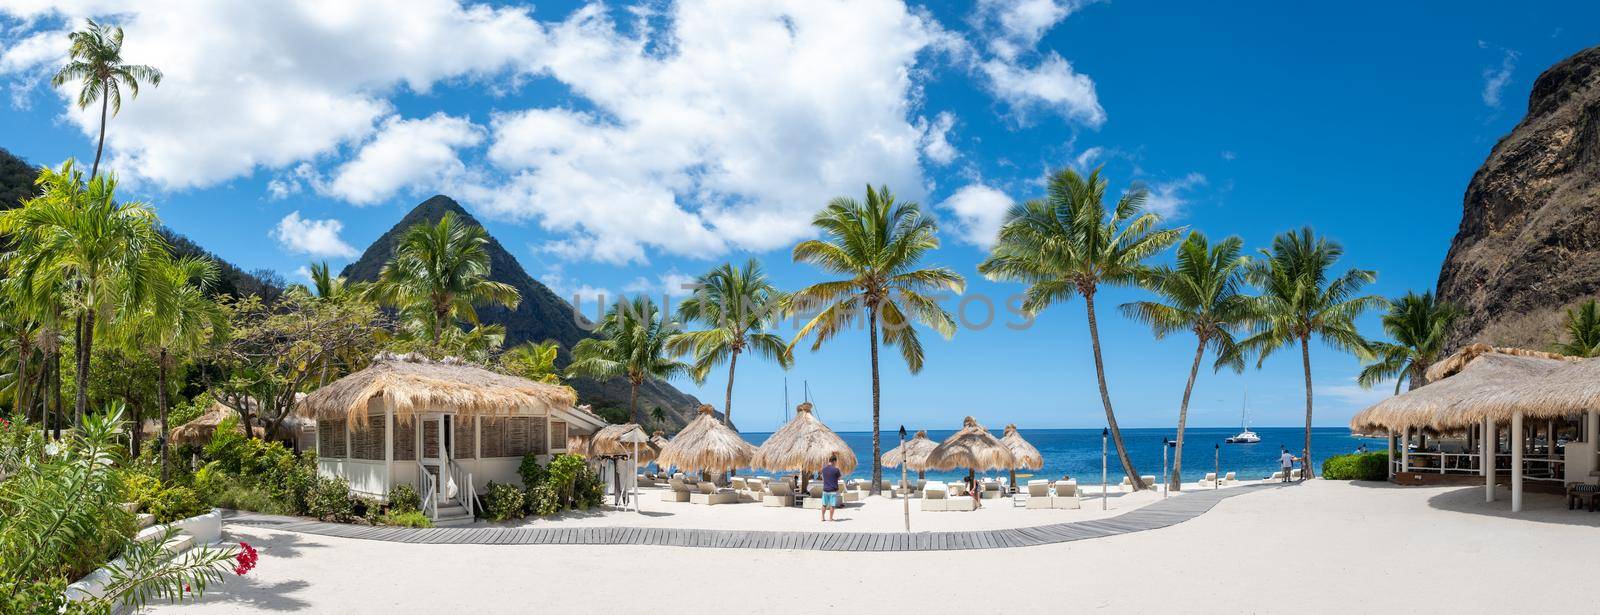 Sugar beach Saint Lucia, is a public white tropical beach with palm trees and luxury beach chairs on the beach of the Island St Lucia Caribbean.